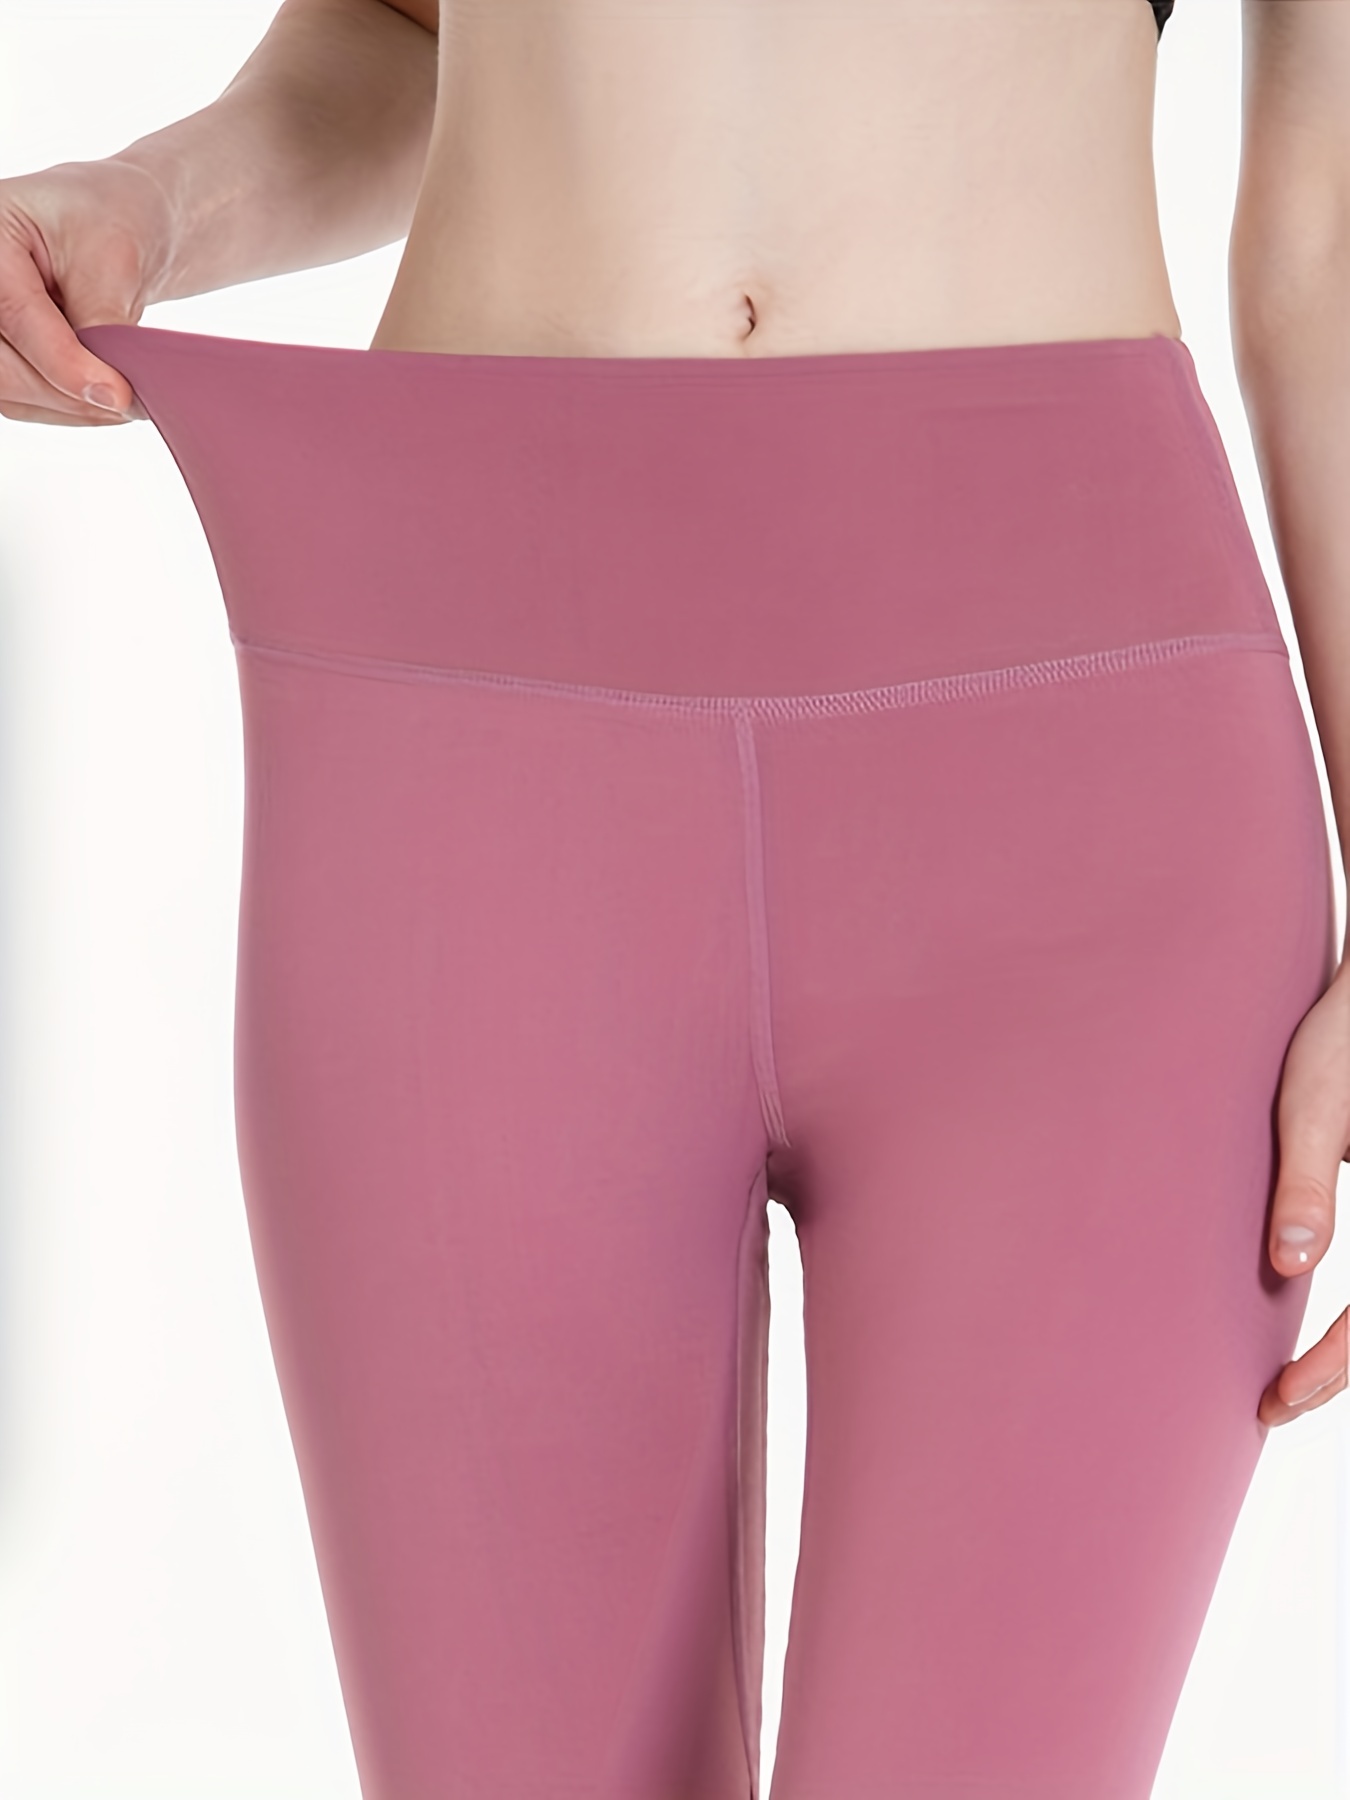 Buy THE BLAZZE 1603 Yoga Pants Capri Leggings for Women Workout